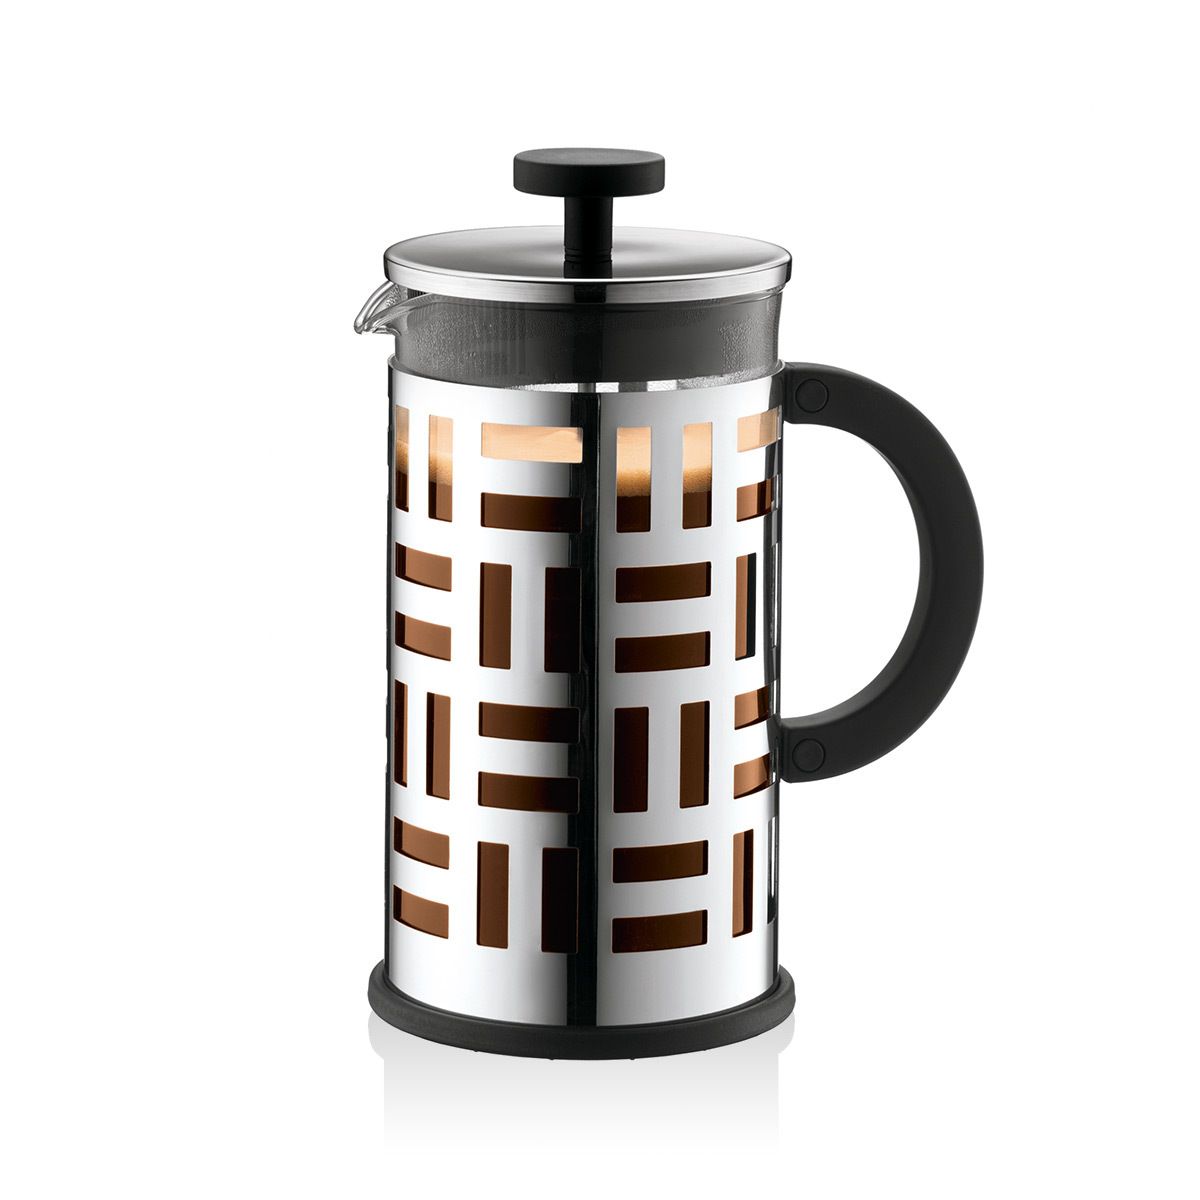 Bodum Eileen French Press coffee maker 8 cup 34 oz - Shiny